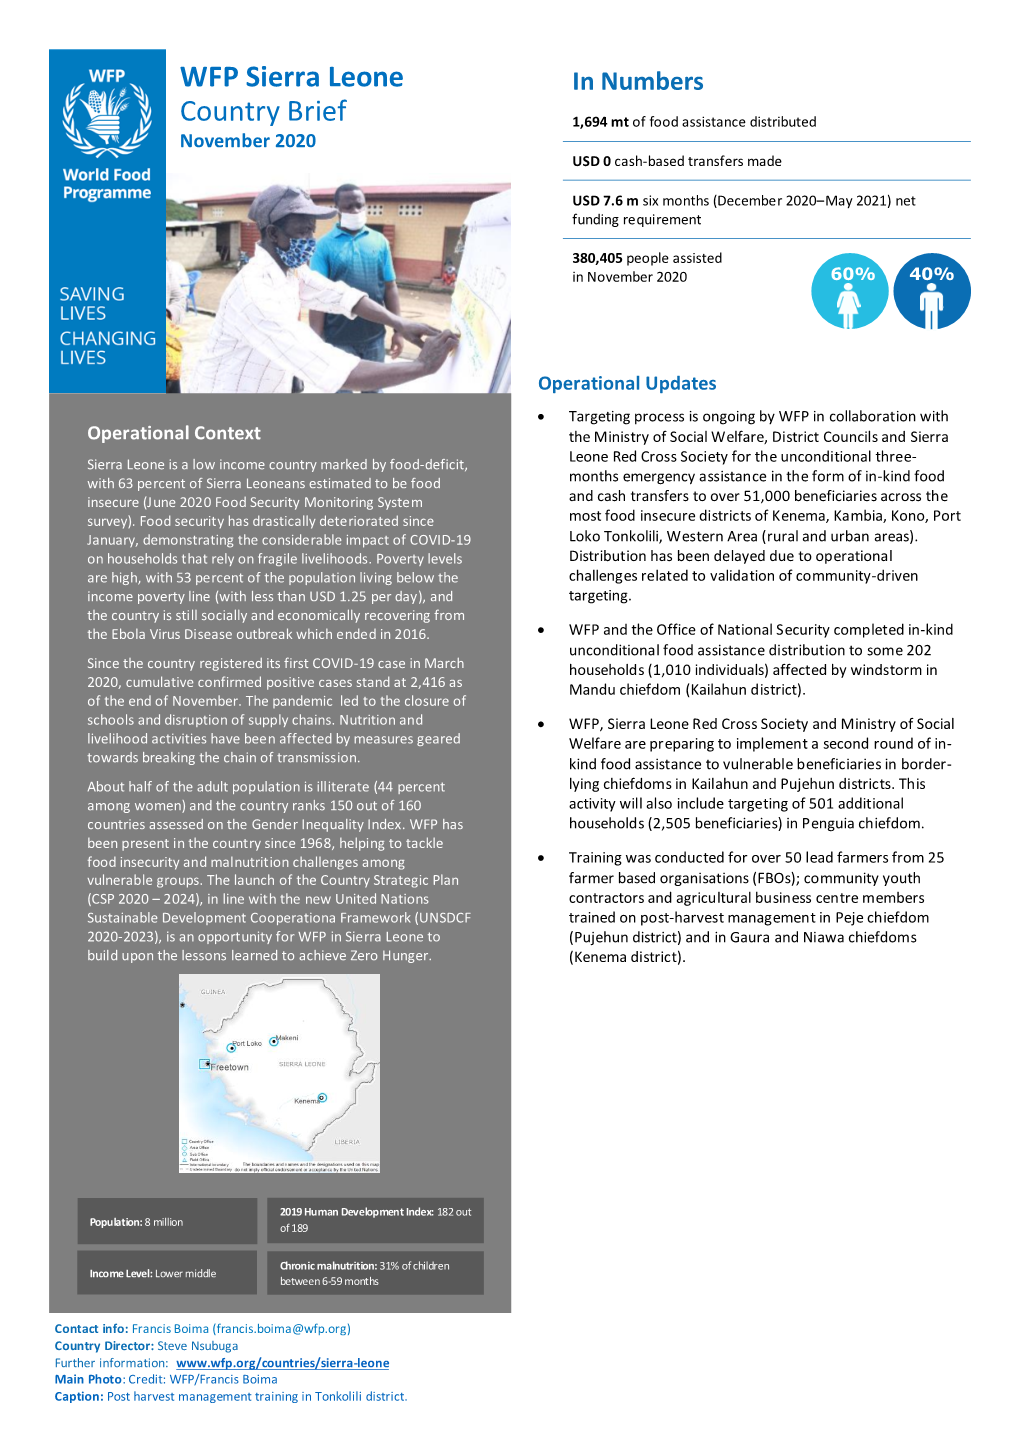 WFP Sierra Leone Country Brief November 2020